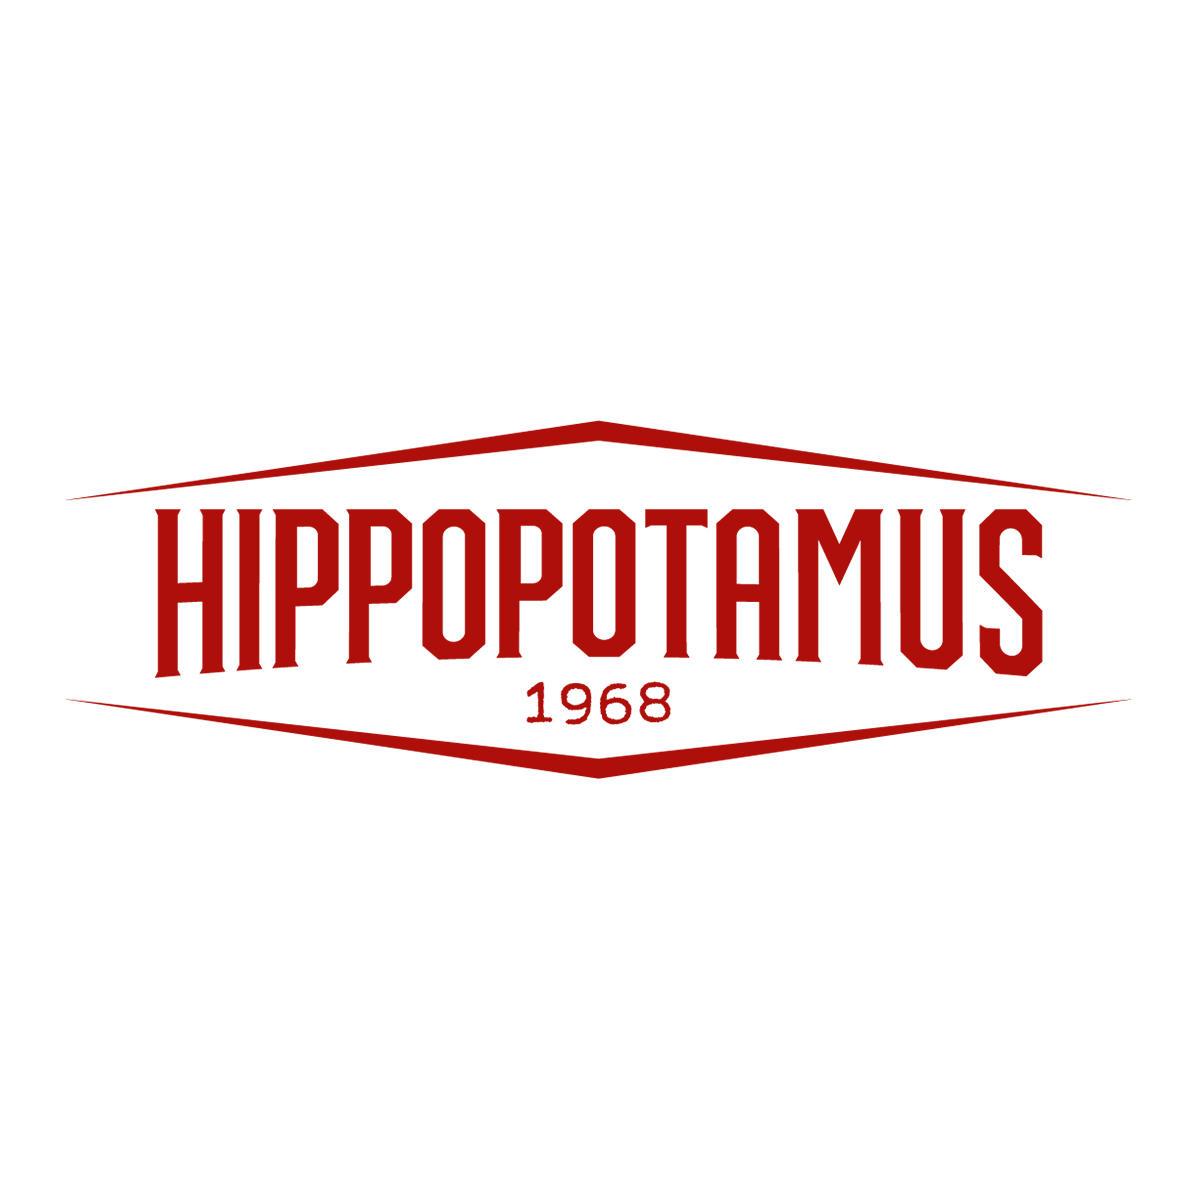 Hippopotamus Steakhouse Agde